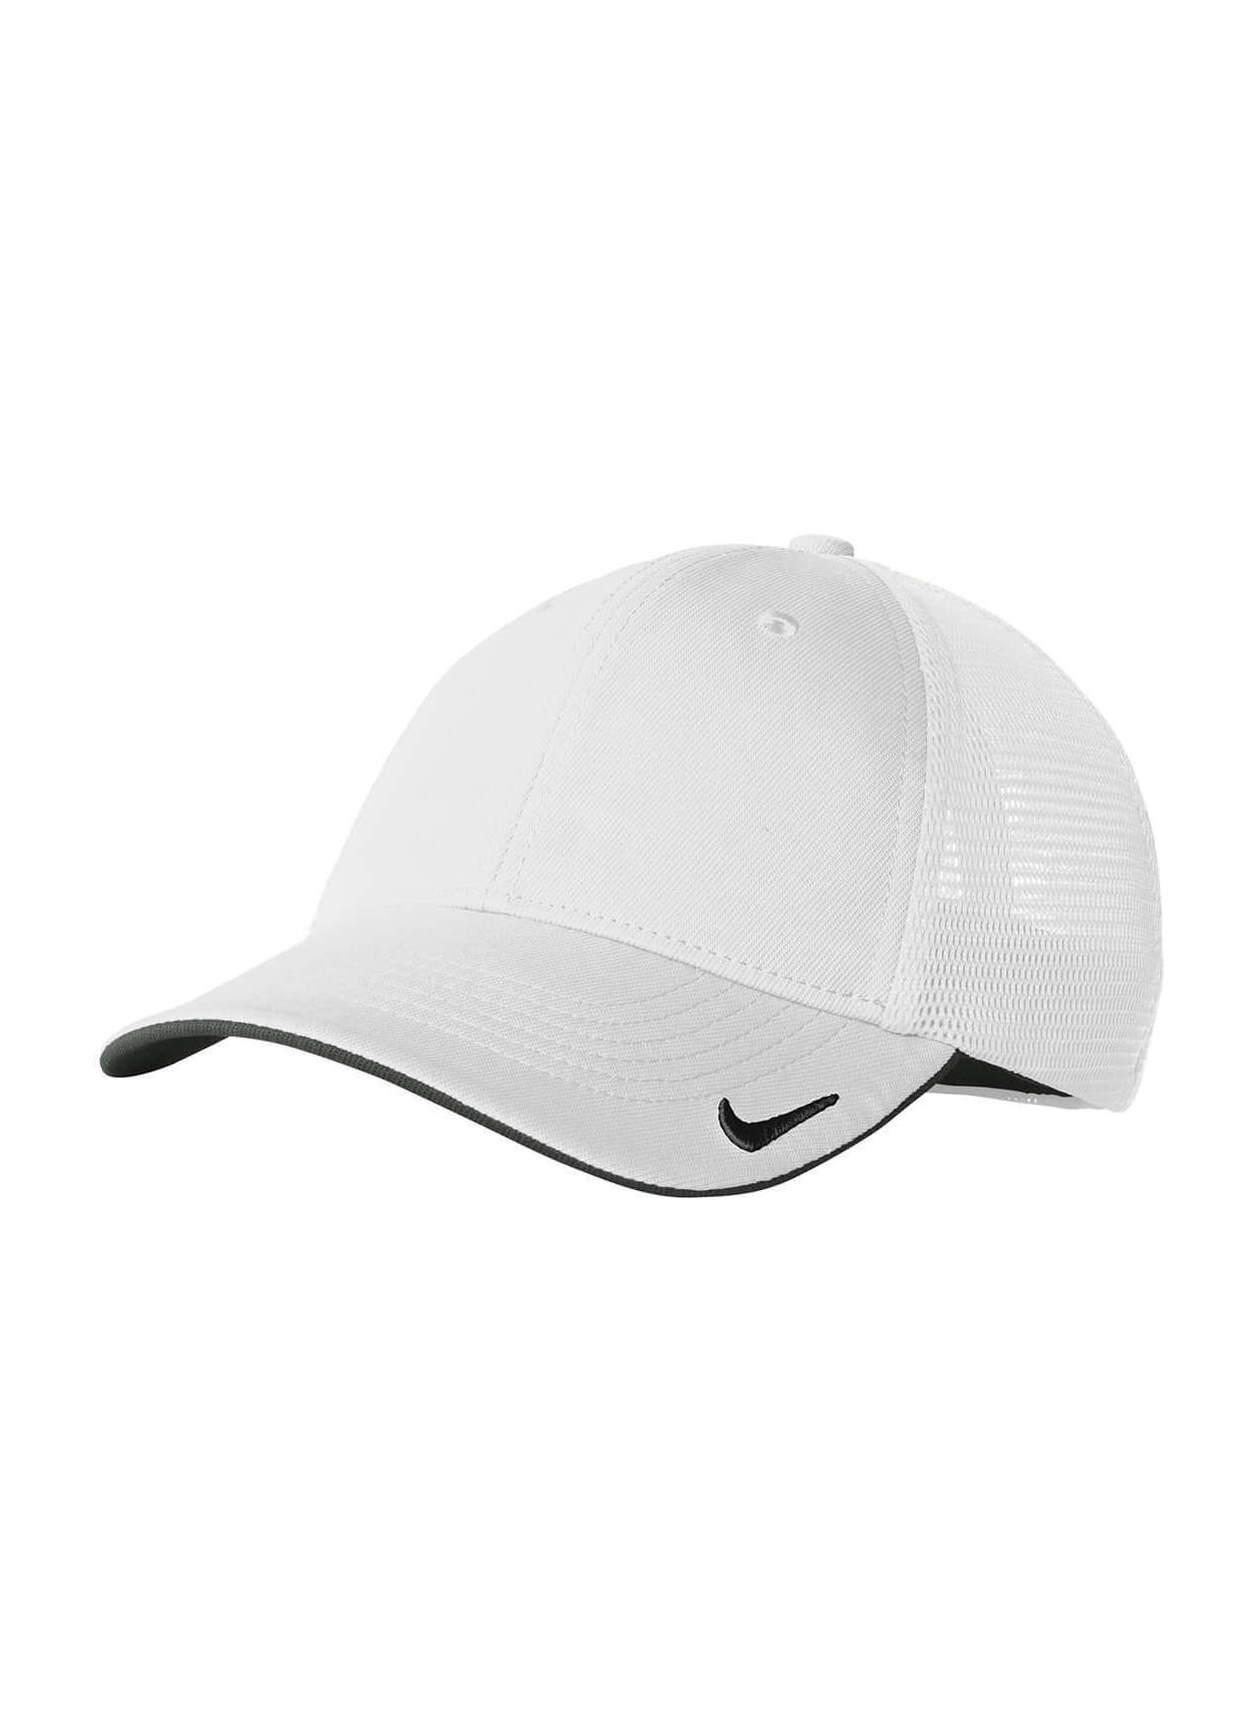 Custom Cotton Mesh Baseball Cap Adjustable Summer Cool Hats For